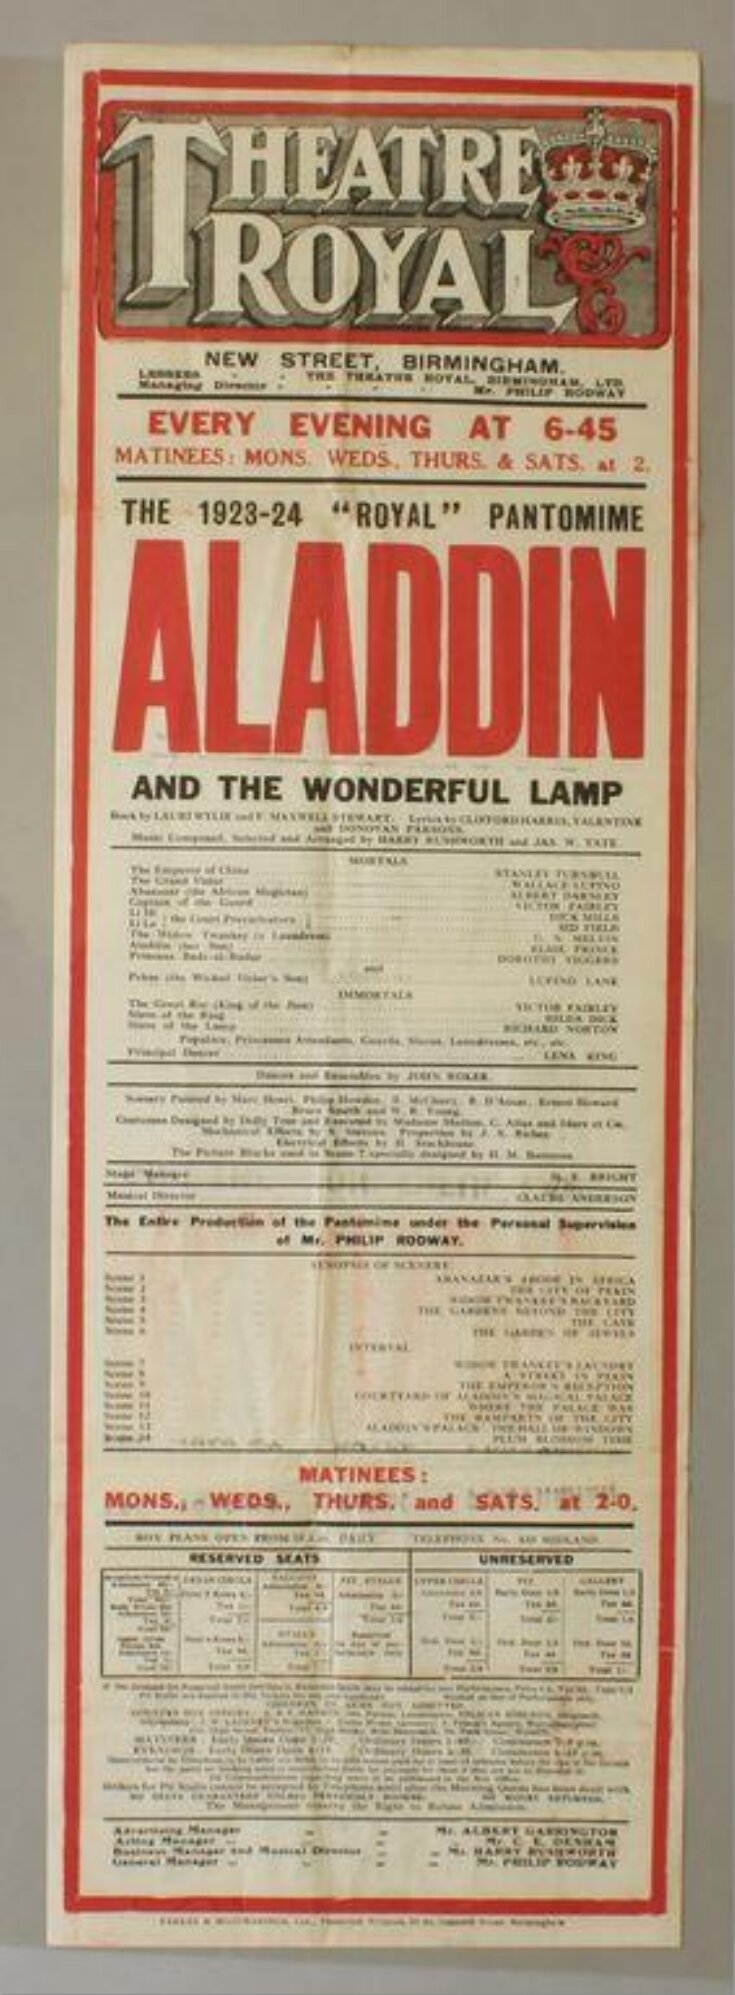 Aladdin and the Wonderful Lamp image